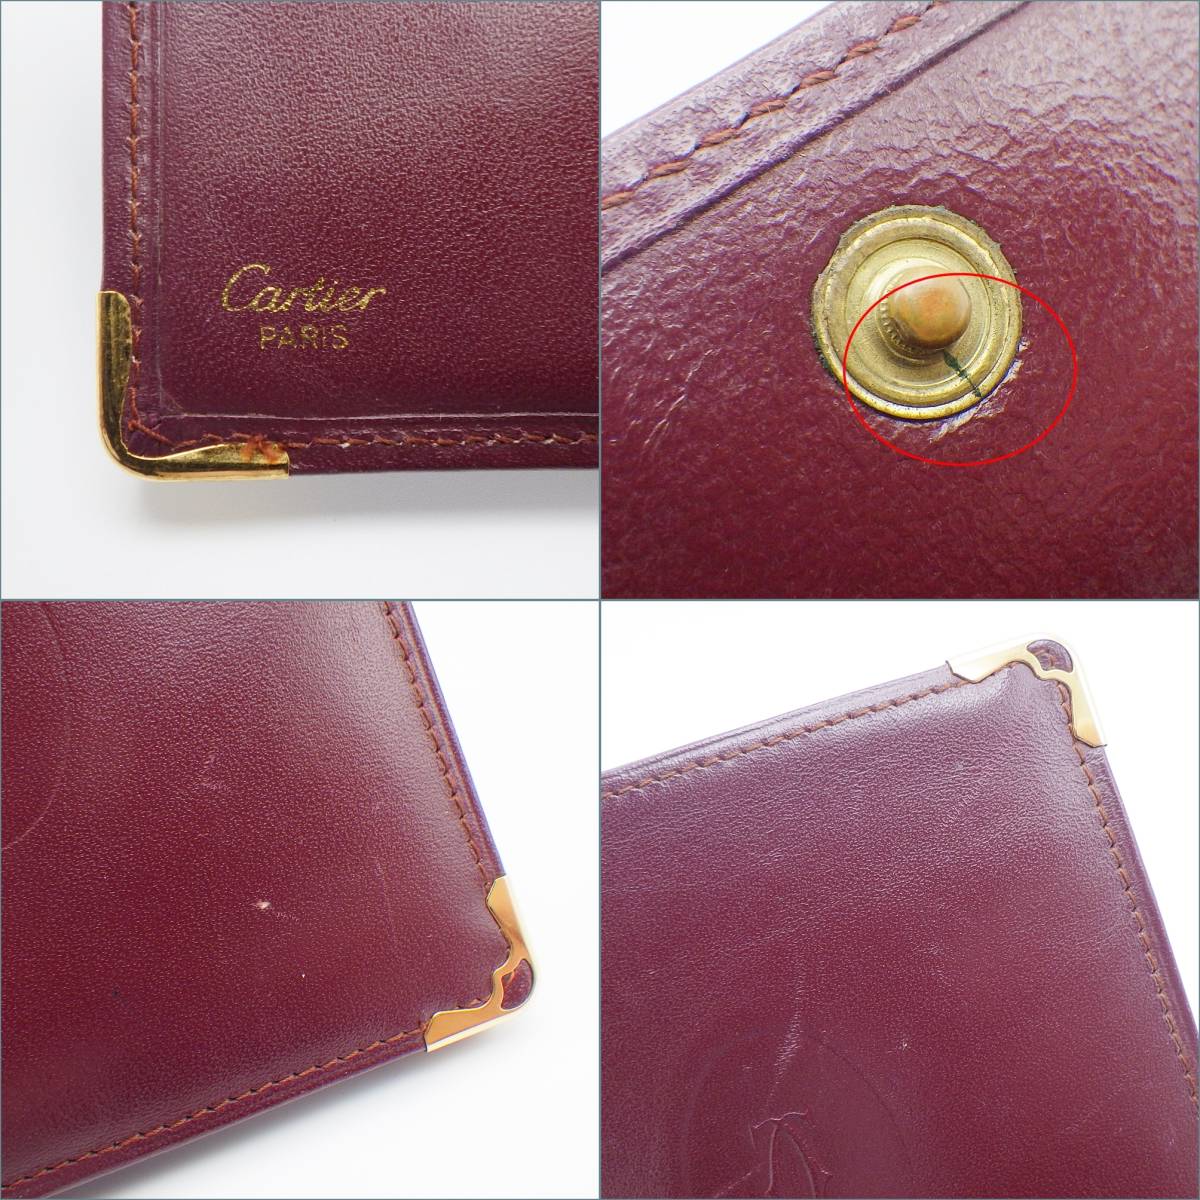 B23-2843 Cartier カルティエ マストライン 二つ折り財布 ボルドー 赤系 ゴールド金具 レディース イタリア製 中古品の画像10